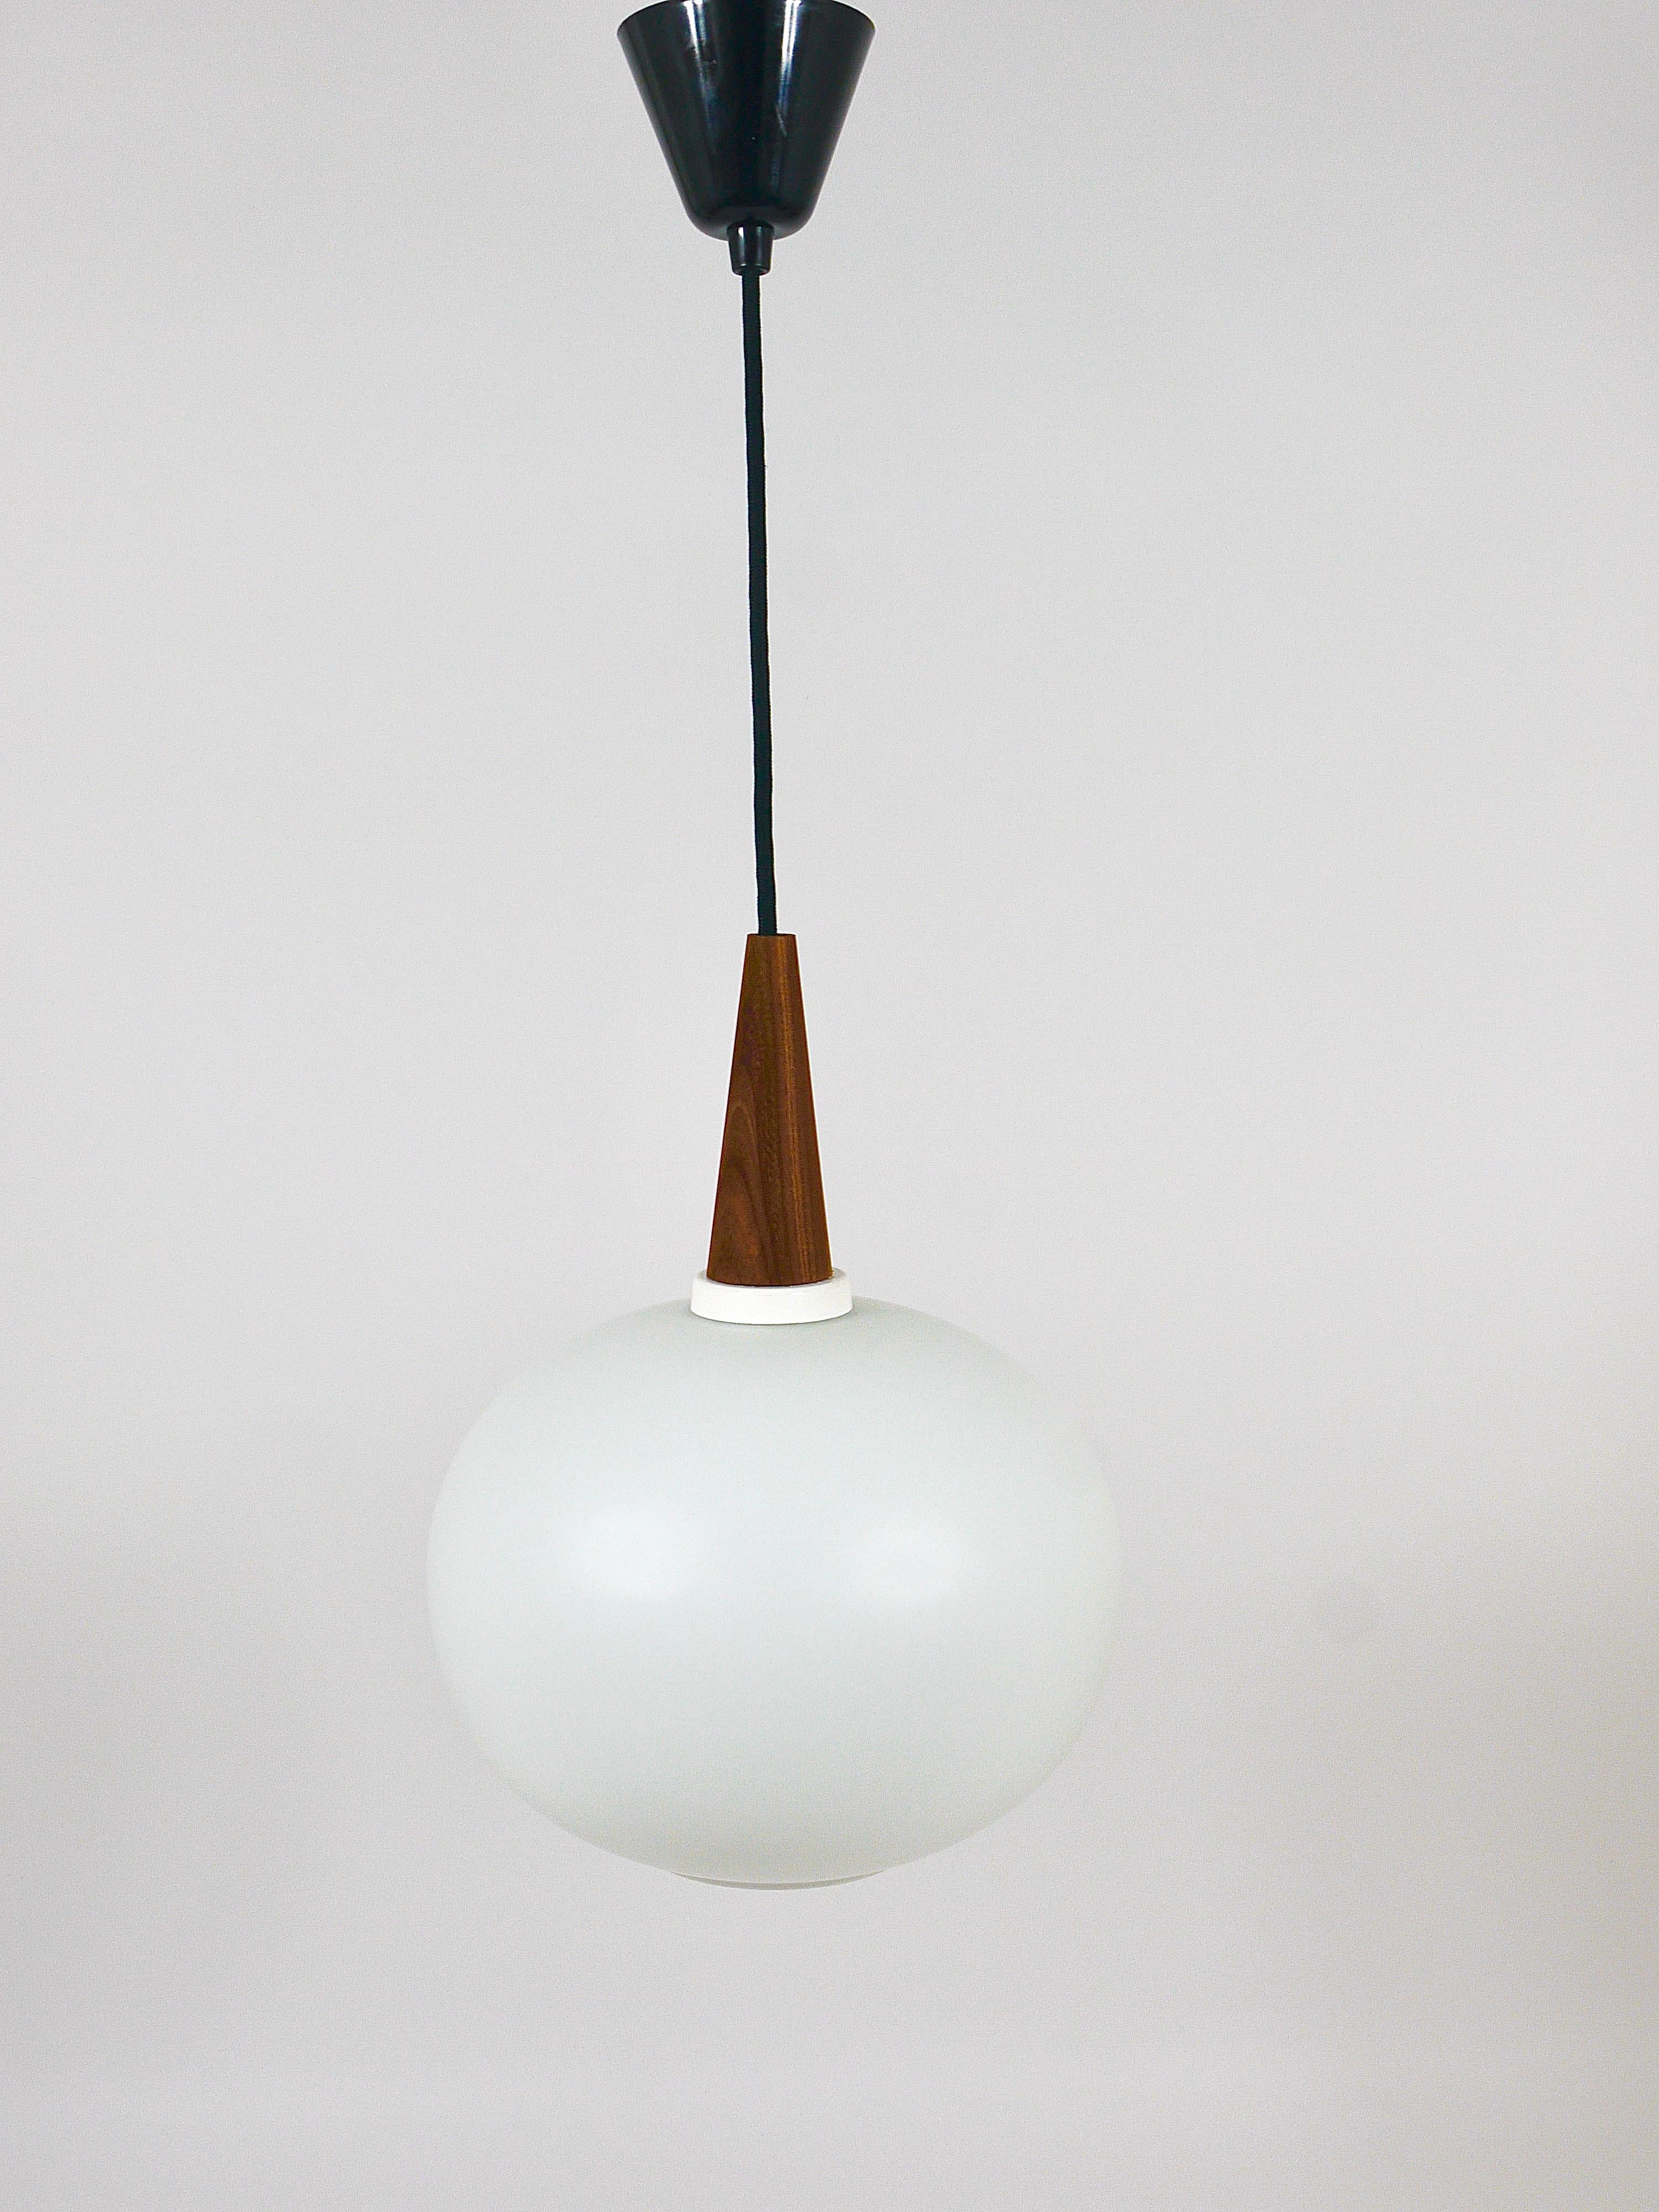 Dutch Louis Kalff Teak & Opaline Pendant Suspension Lamp, Philips, Netherlands For Sale